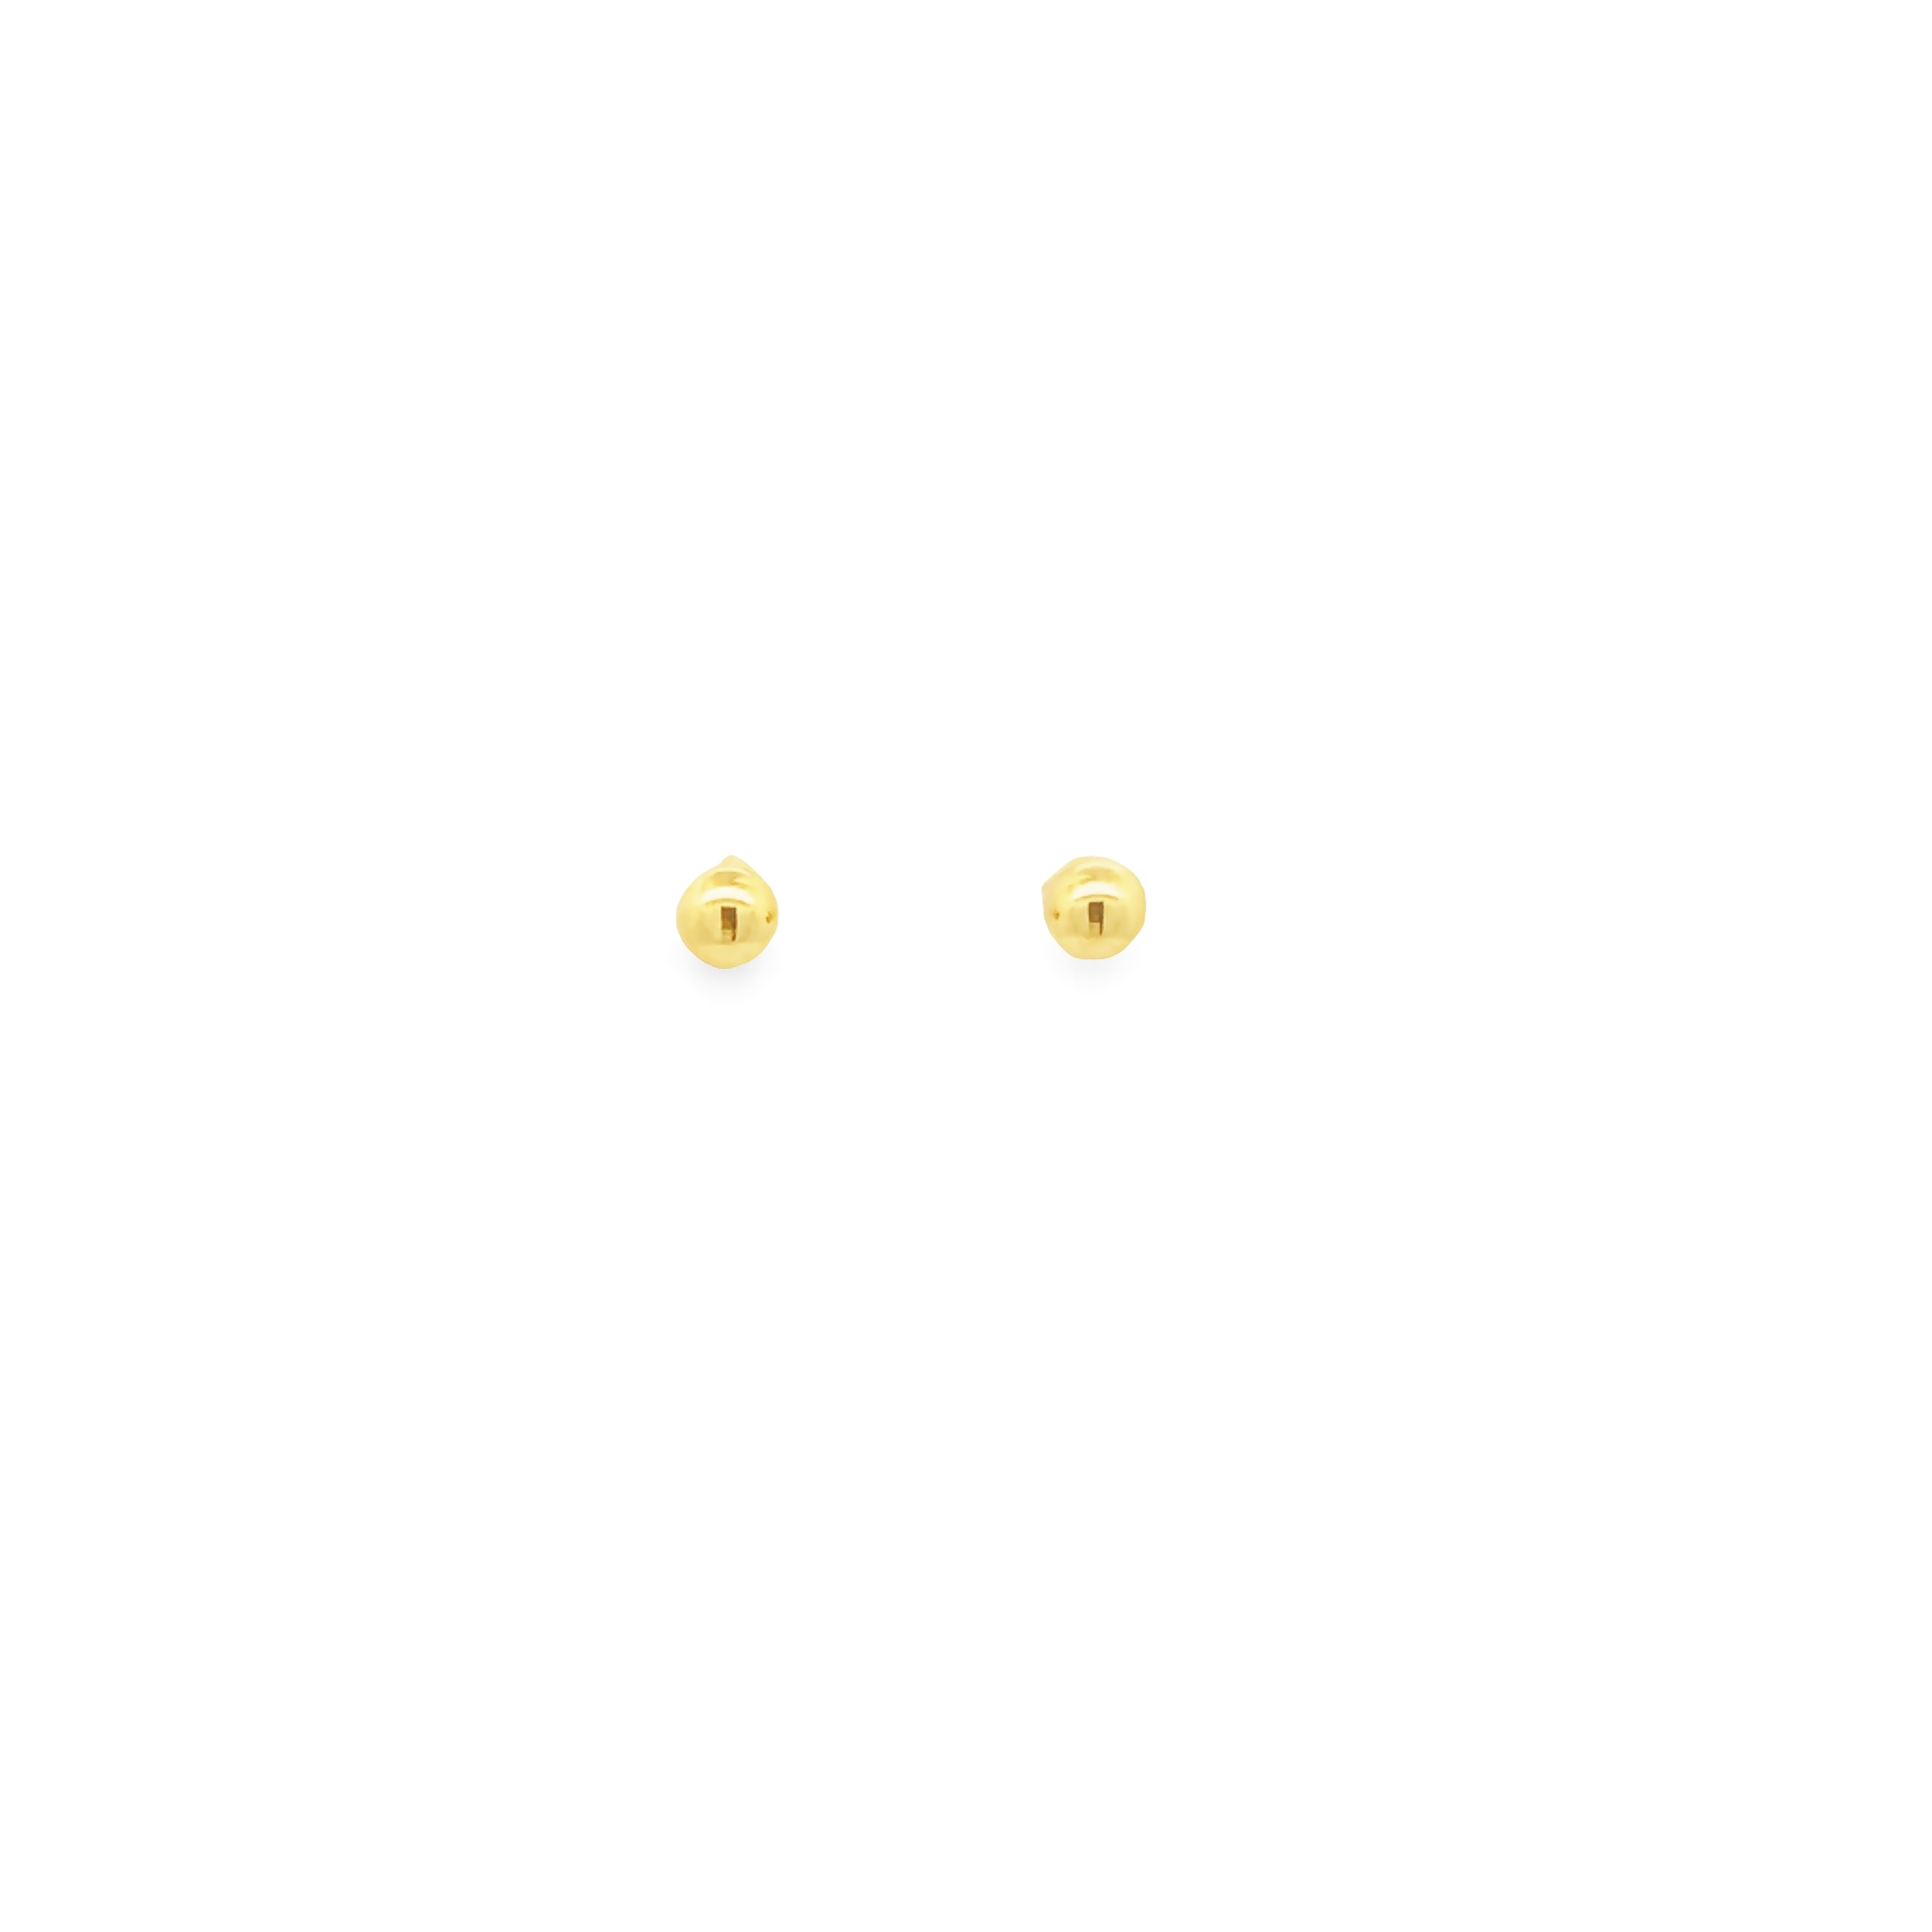 5mm 14k Yellow Gold Ball Stud Earrings